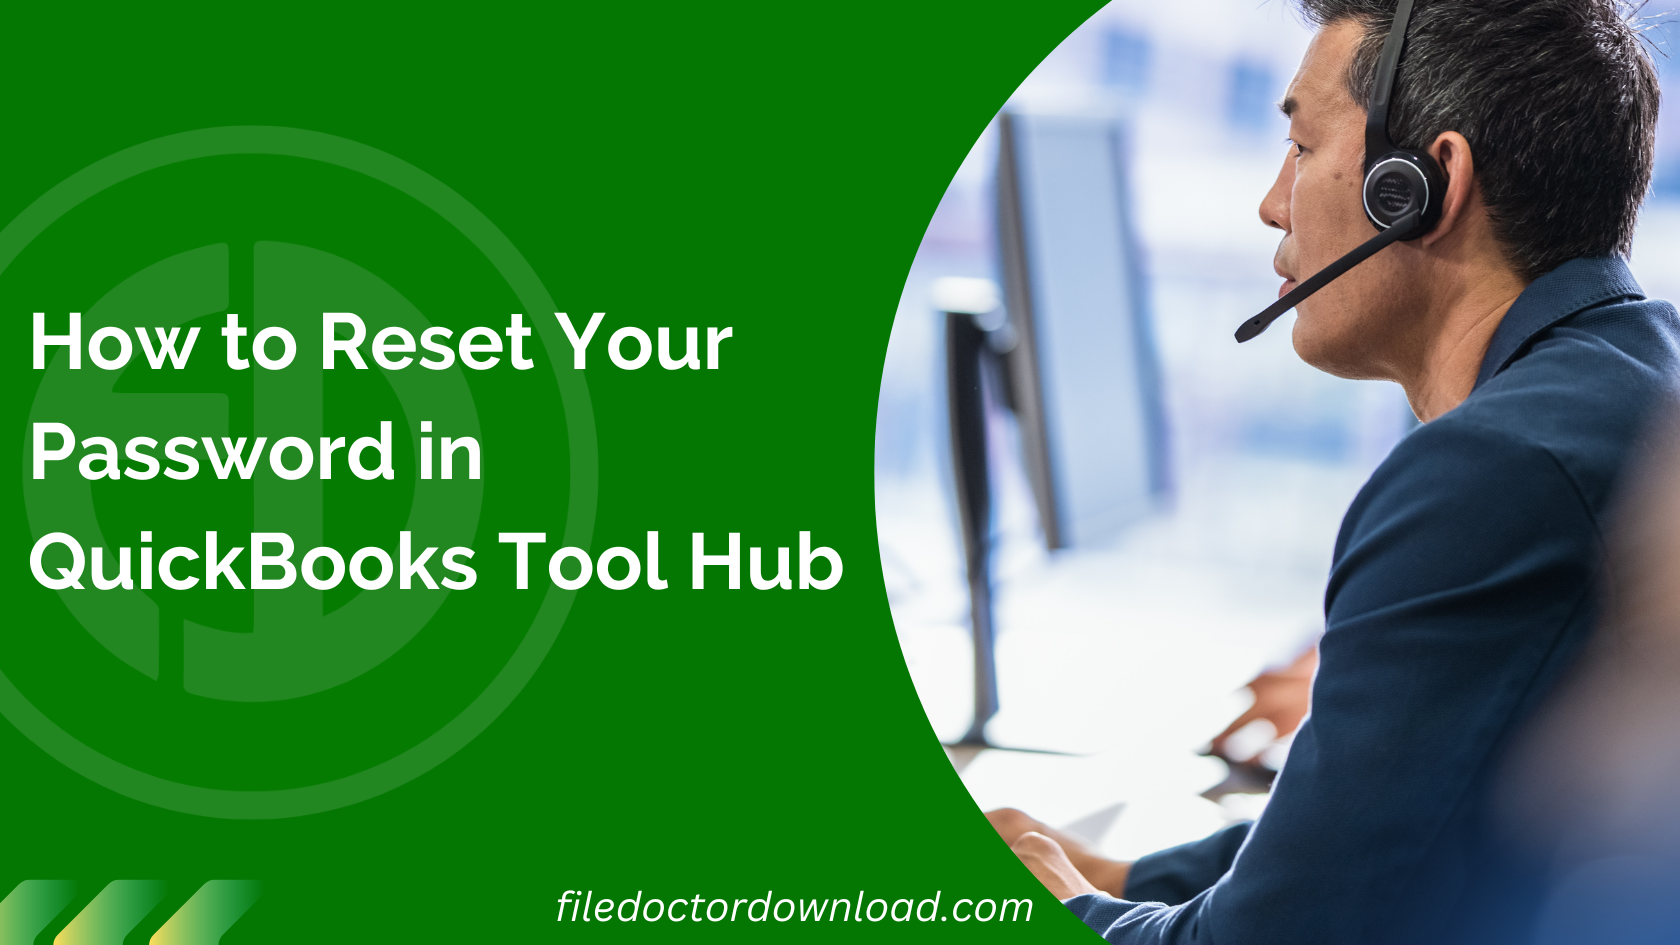 How to Reset Your Password in QuickBooks Tool Hub